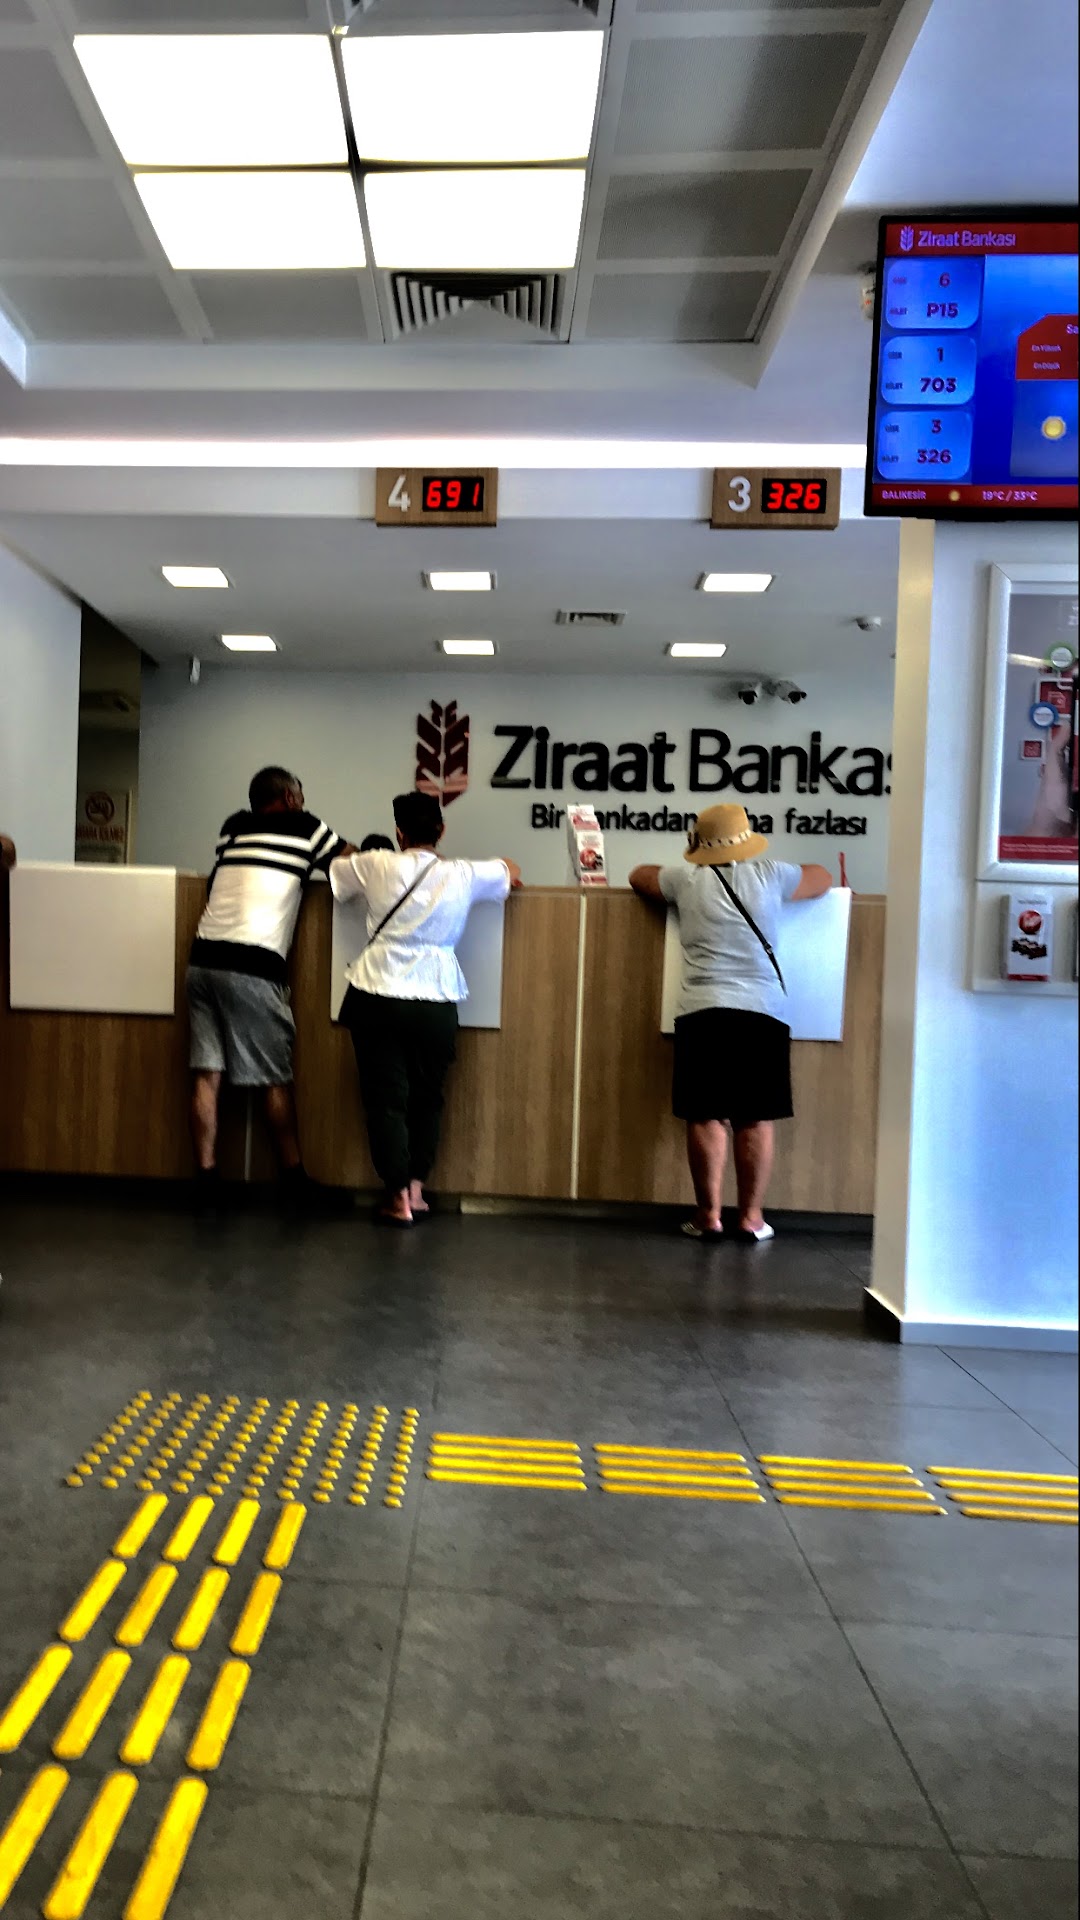 Ziraat Bankas Altnoluk-EdremitBalkesir ubesi